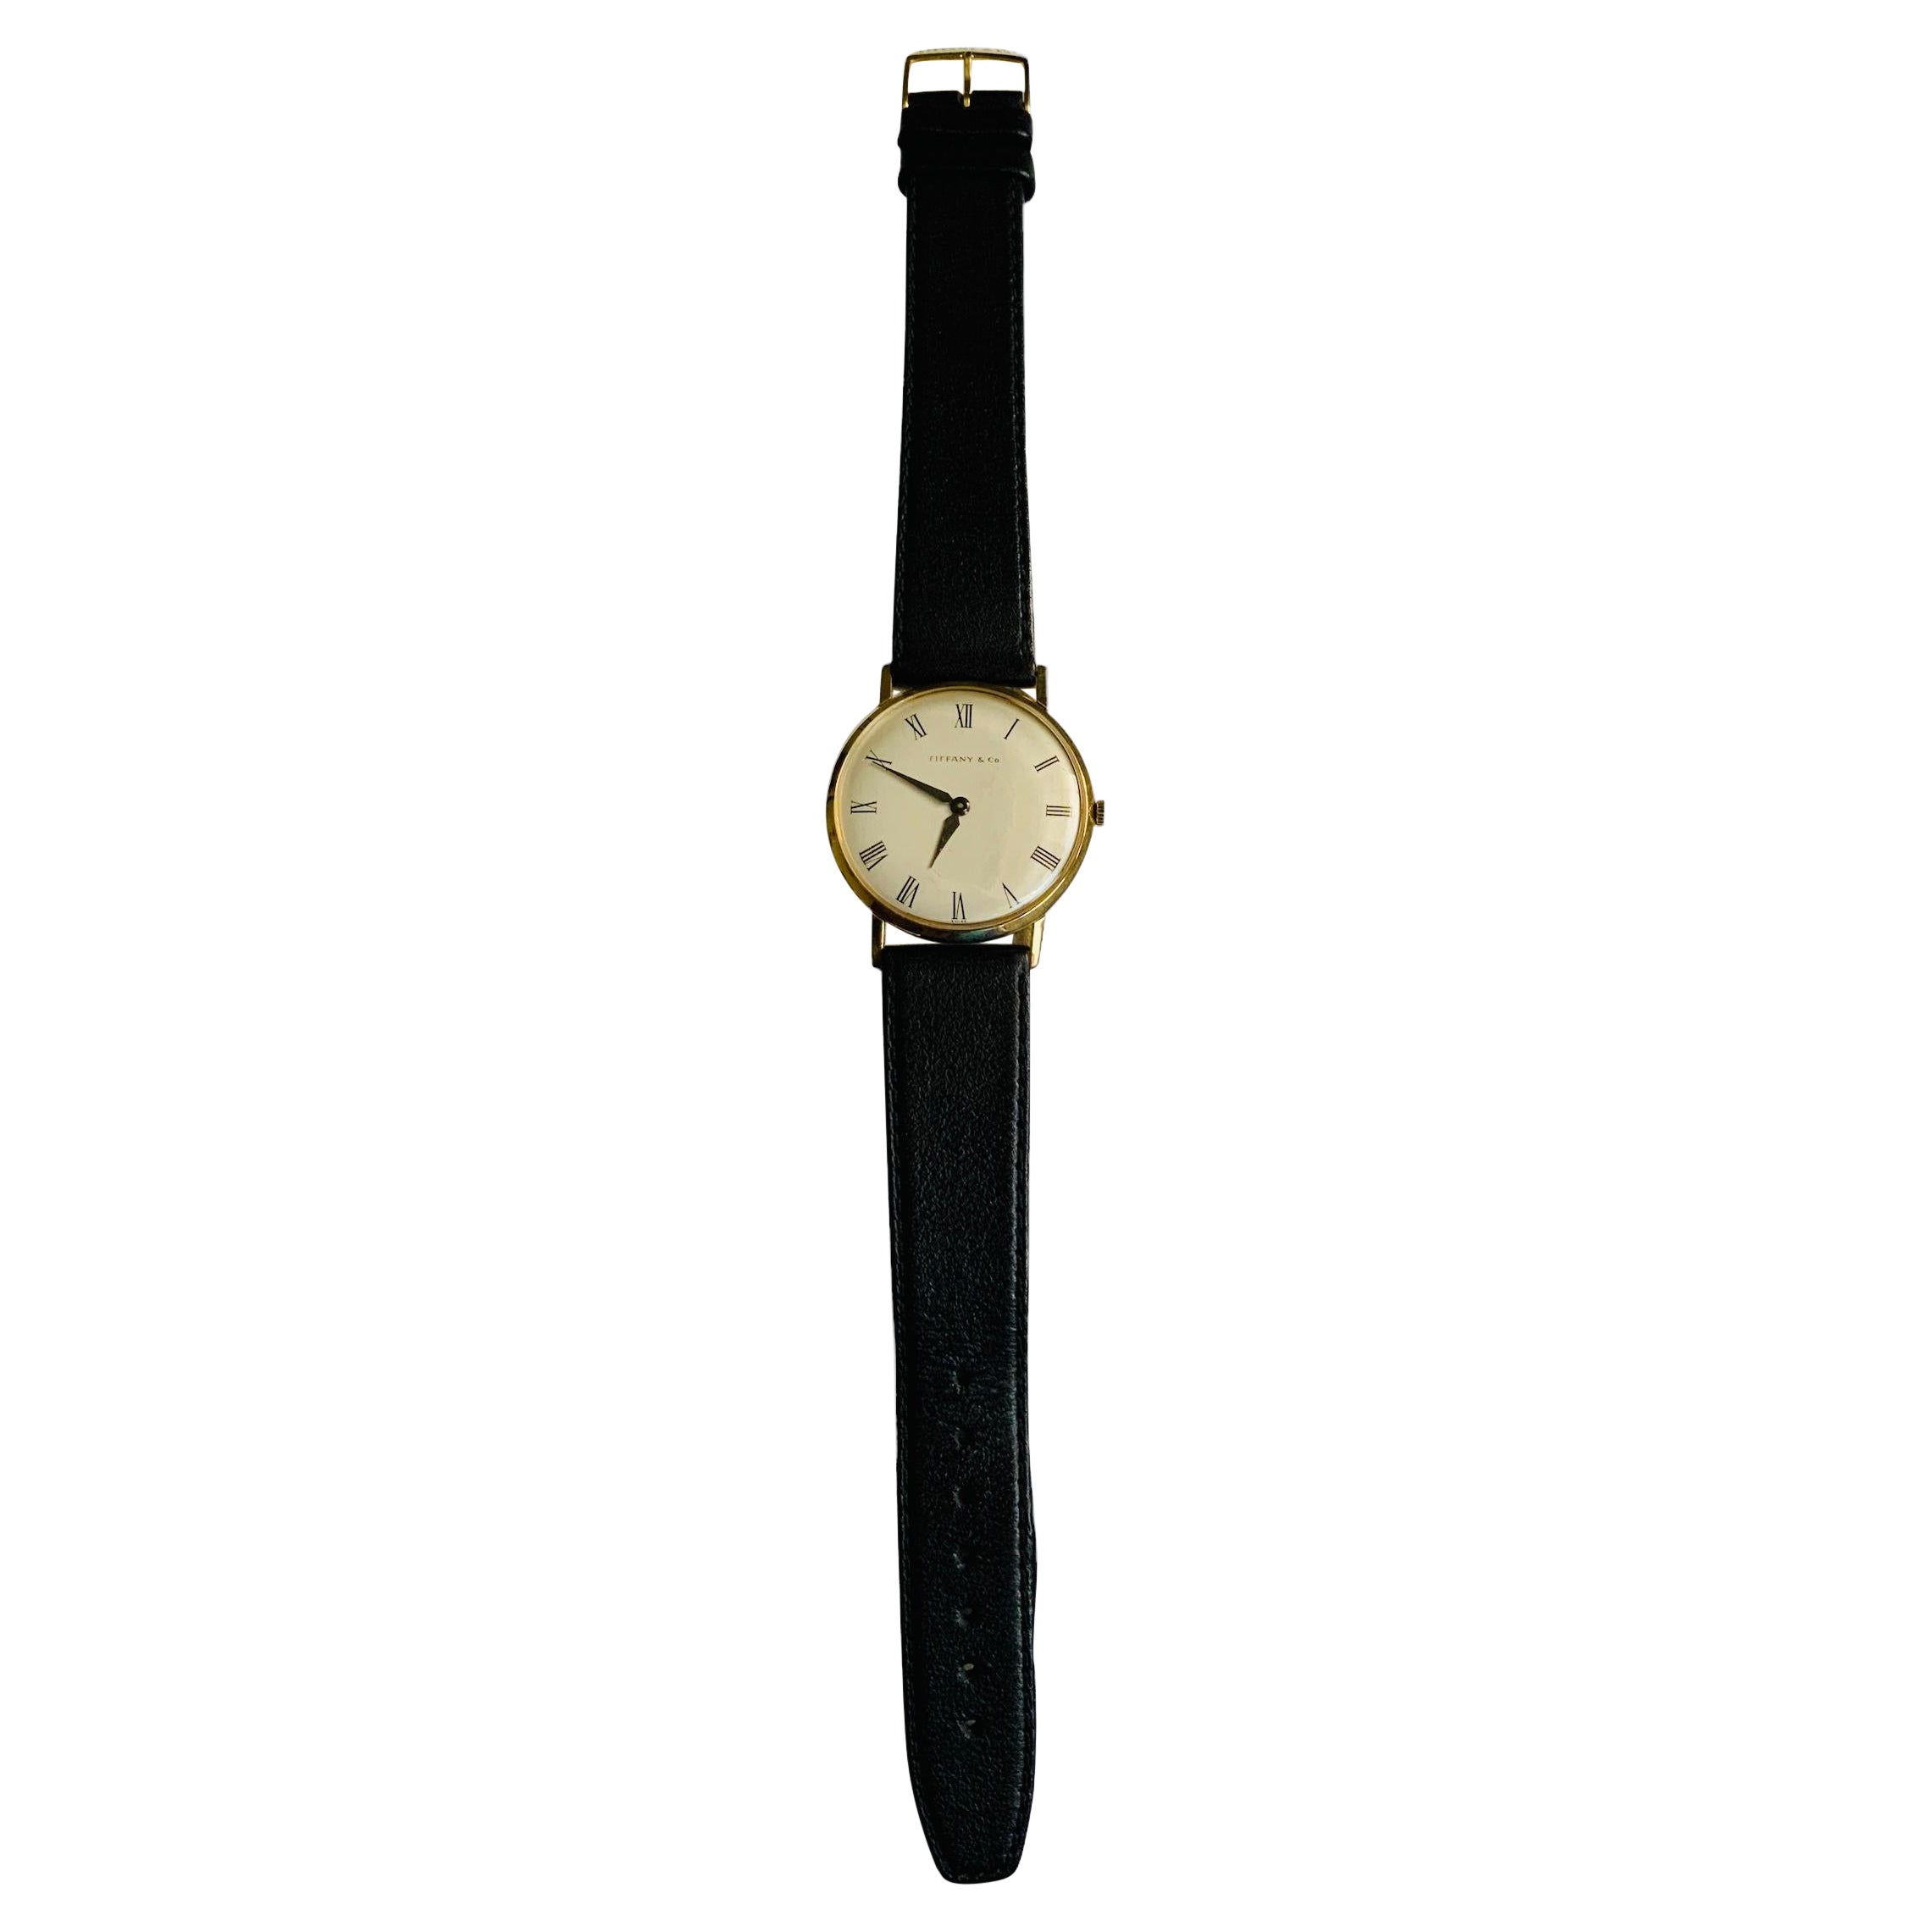 Tiffany & Company Men’s Wrist Watch 